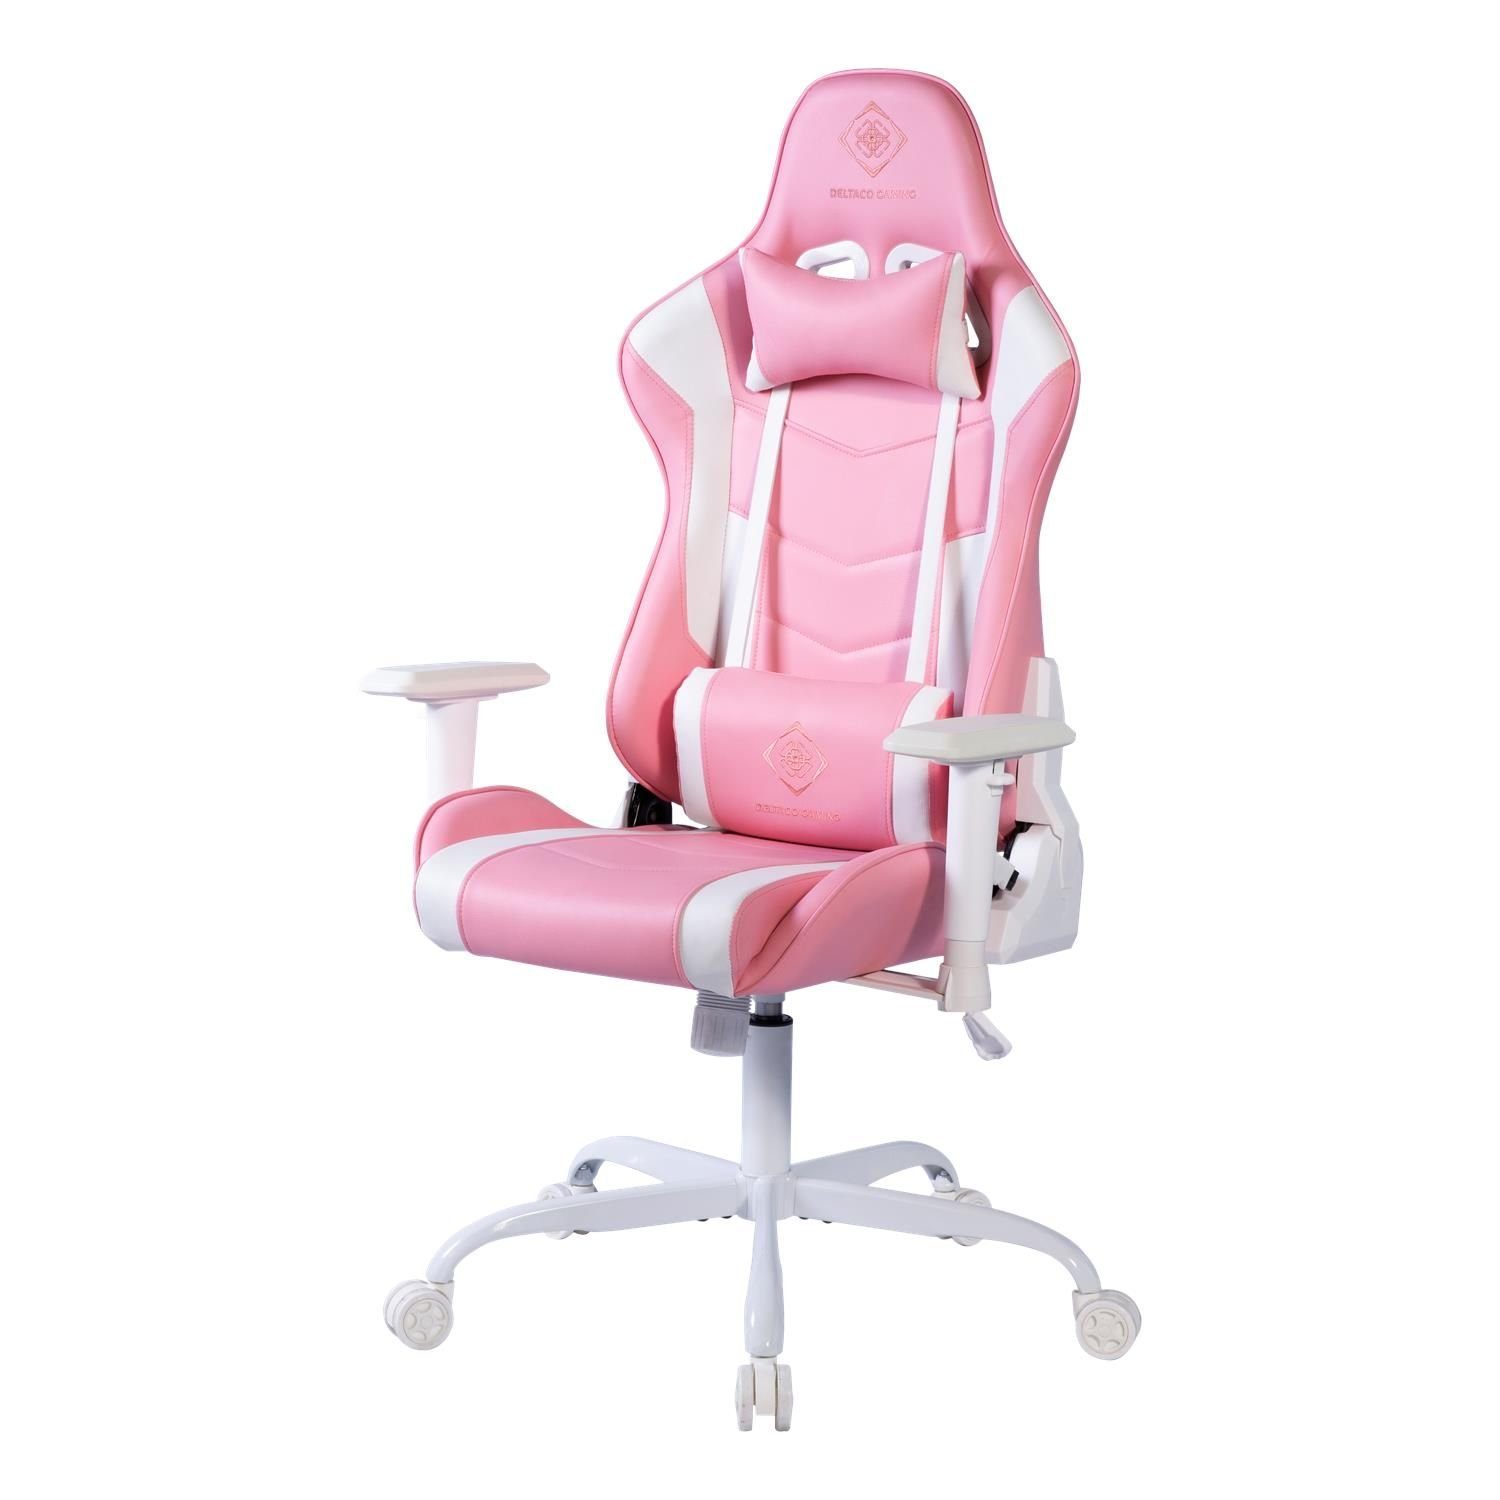 DELTACO Gaming-Stuhl Gaming Stuhl Jumbo Gamer Stuhl Kissen 110kg (kein Set), rosa, extra groß, hohe Rückenlehne, inkl. 5 Jahre Herstellergarantie pink/weiß